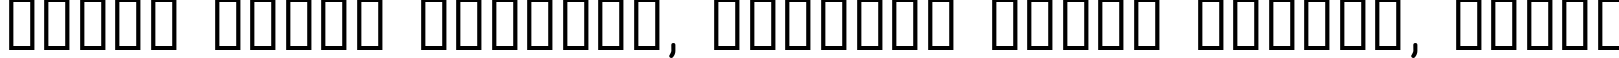 Пример написания шрифтом Aunchanted Xspace Bold текста на белорусском